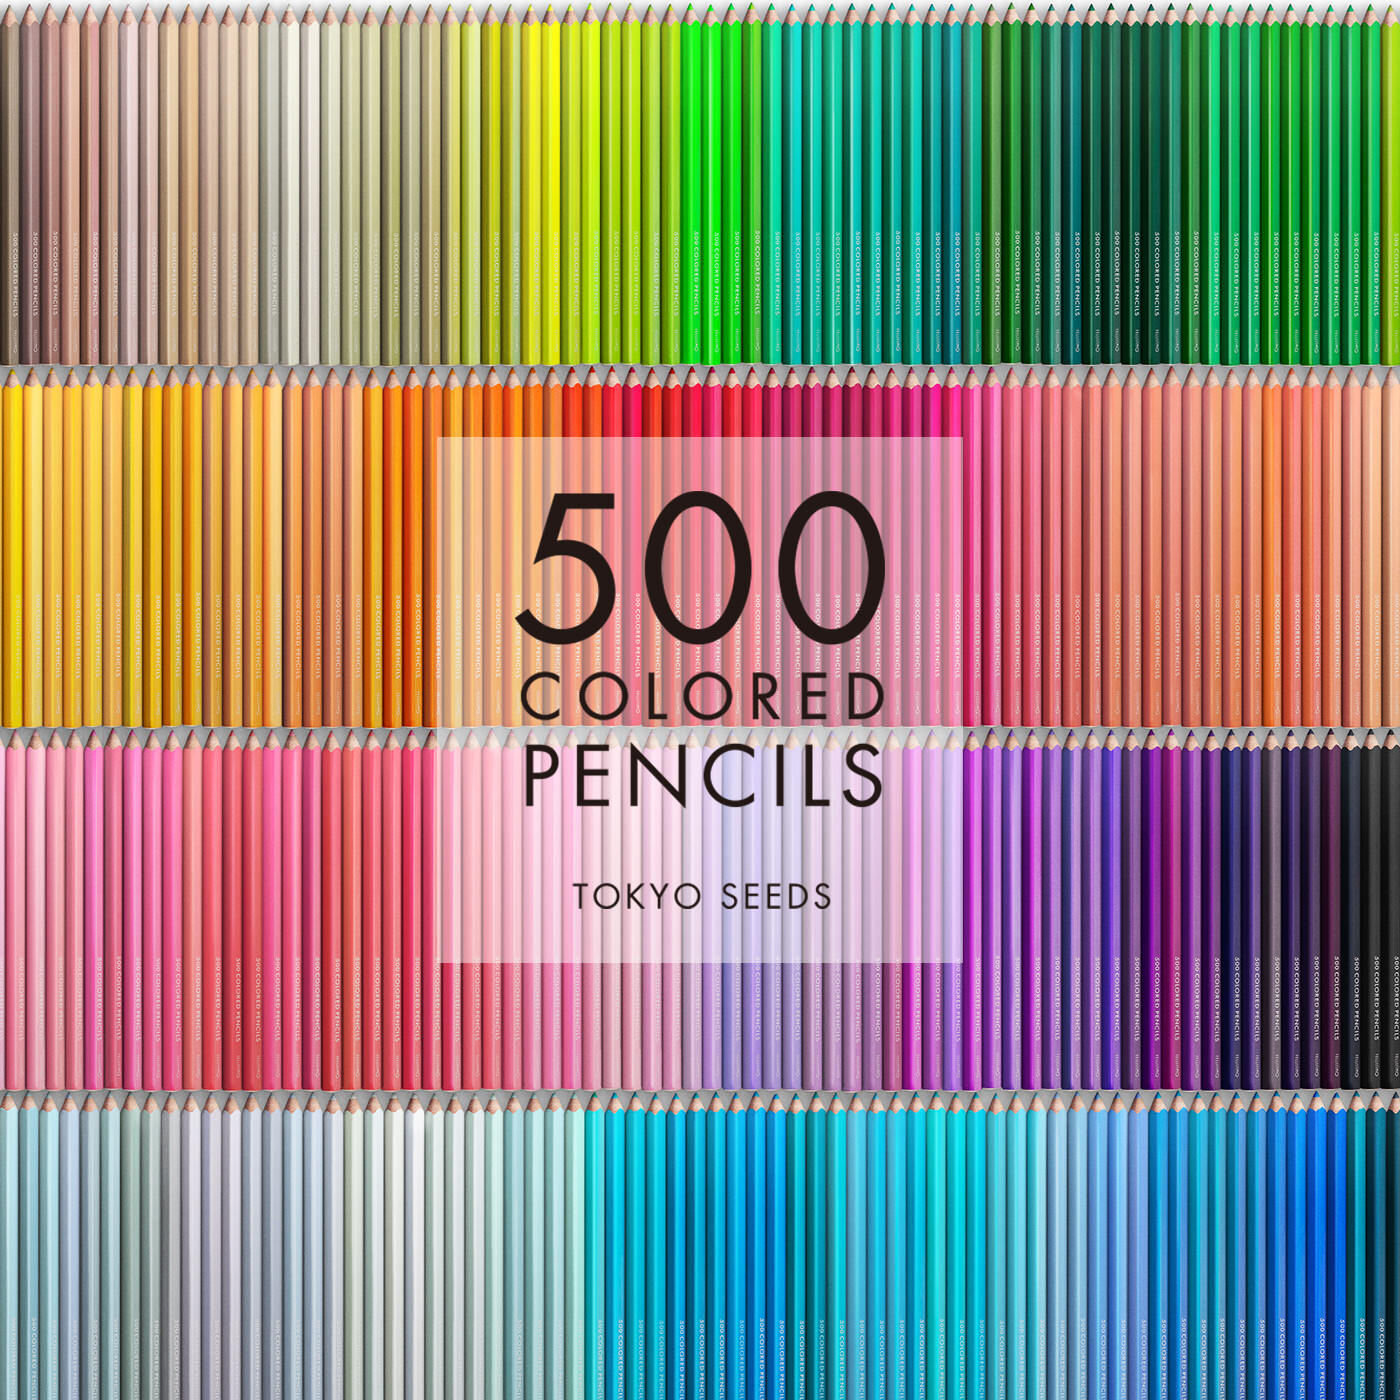 Real Stock|【366/500 TWINKLE TWINKLE】500色の色えんぴつ TOKYO SEEDS|1992年、世界初の「500色」という膨大な色数の色えんぴつが誕生して以来、その販売数は発売当初から合わせると、世界55ヵ国10万セット以上。今回、メイド・イン・ジャパンにこだわり、すべてが新しく生まれ変わって登場しました。